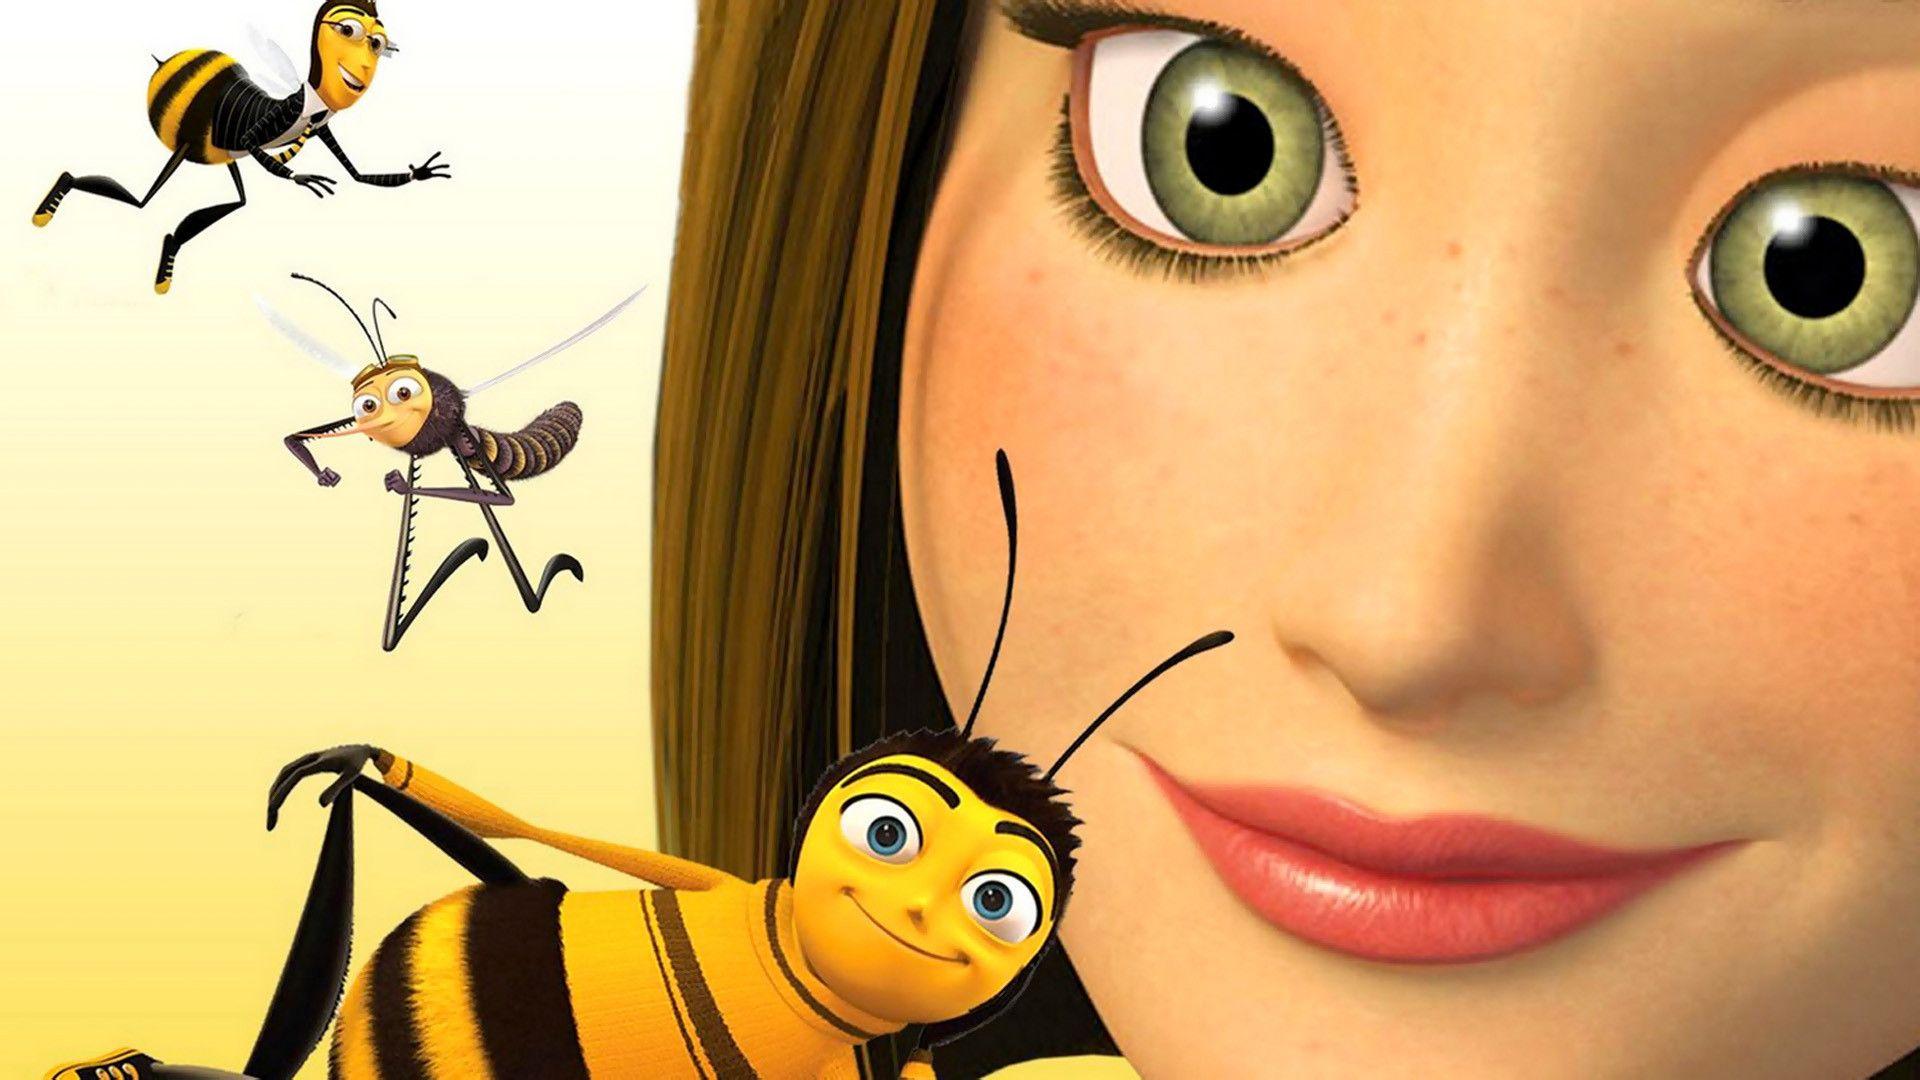 Bee Movie HD Wallpaper